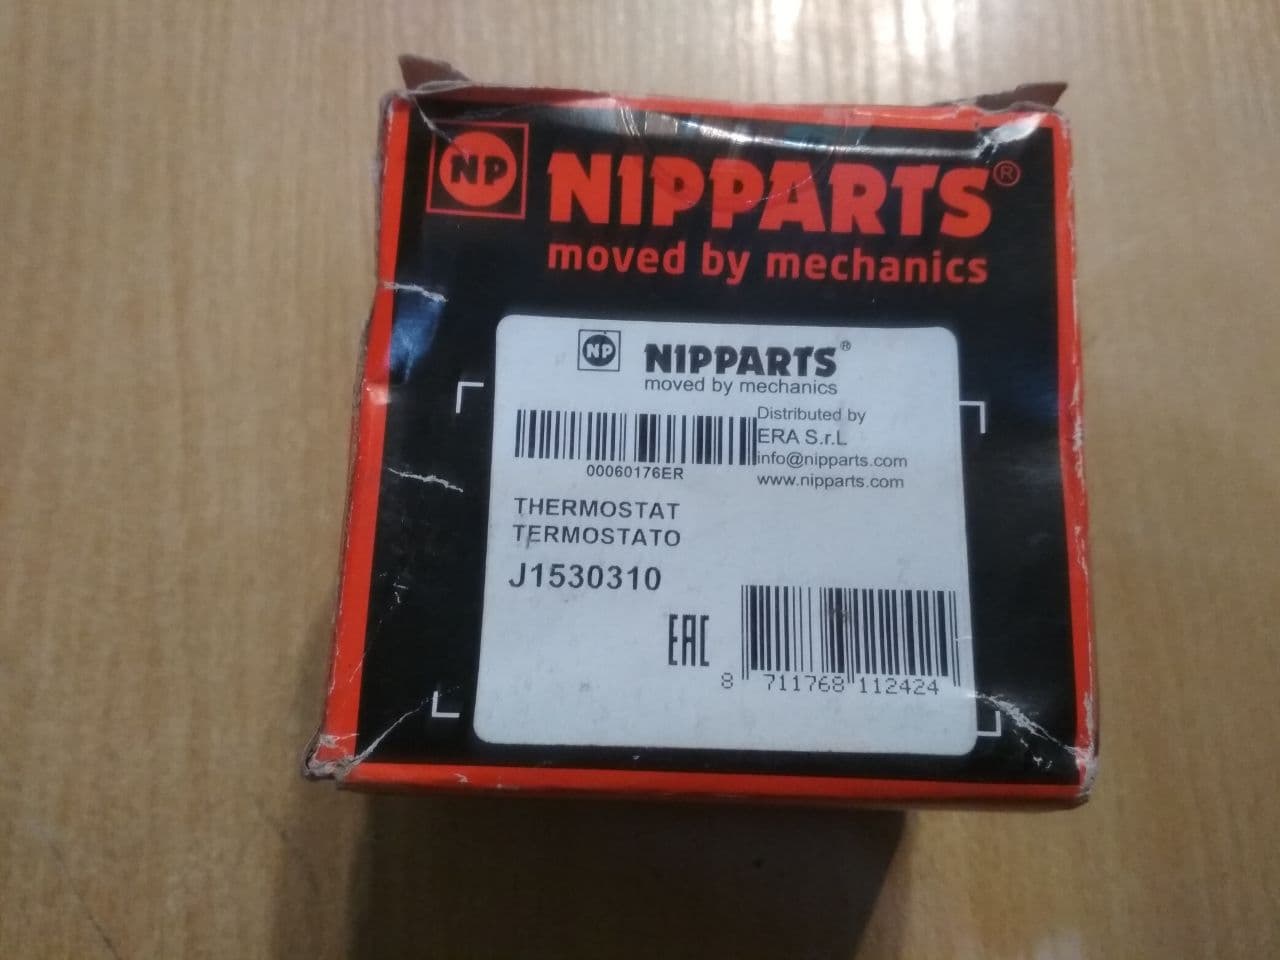    Nipparts